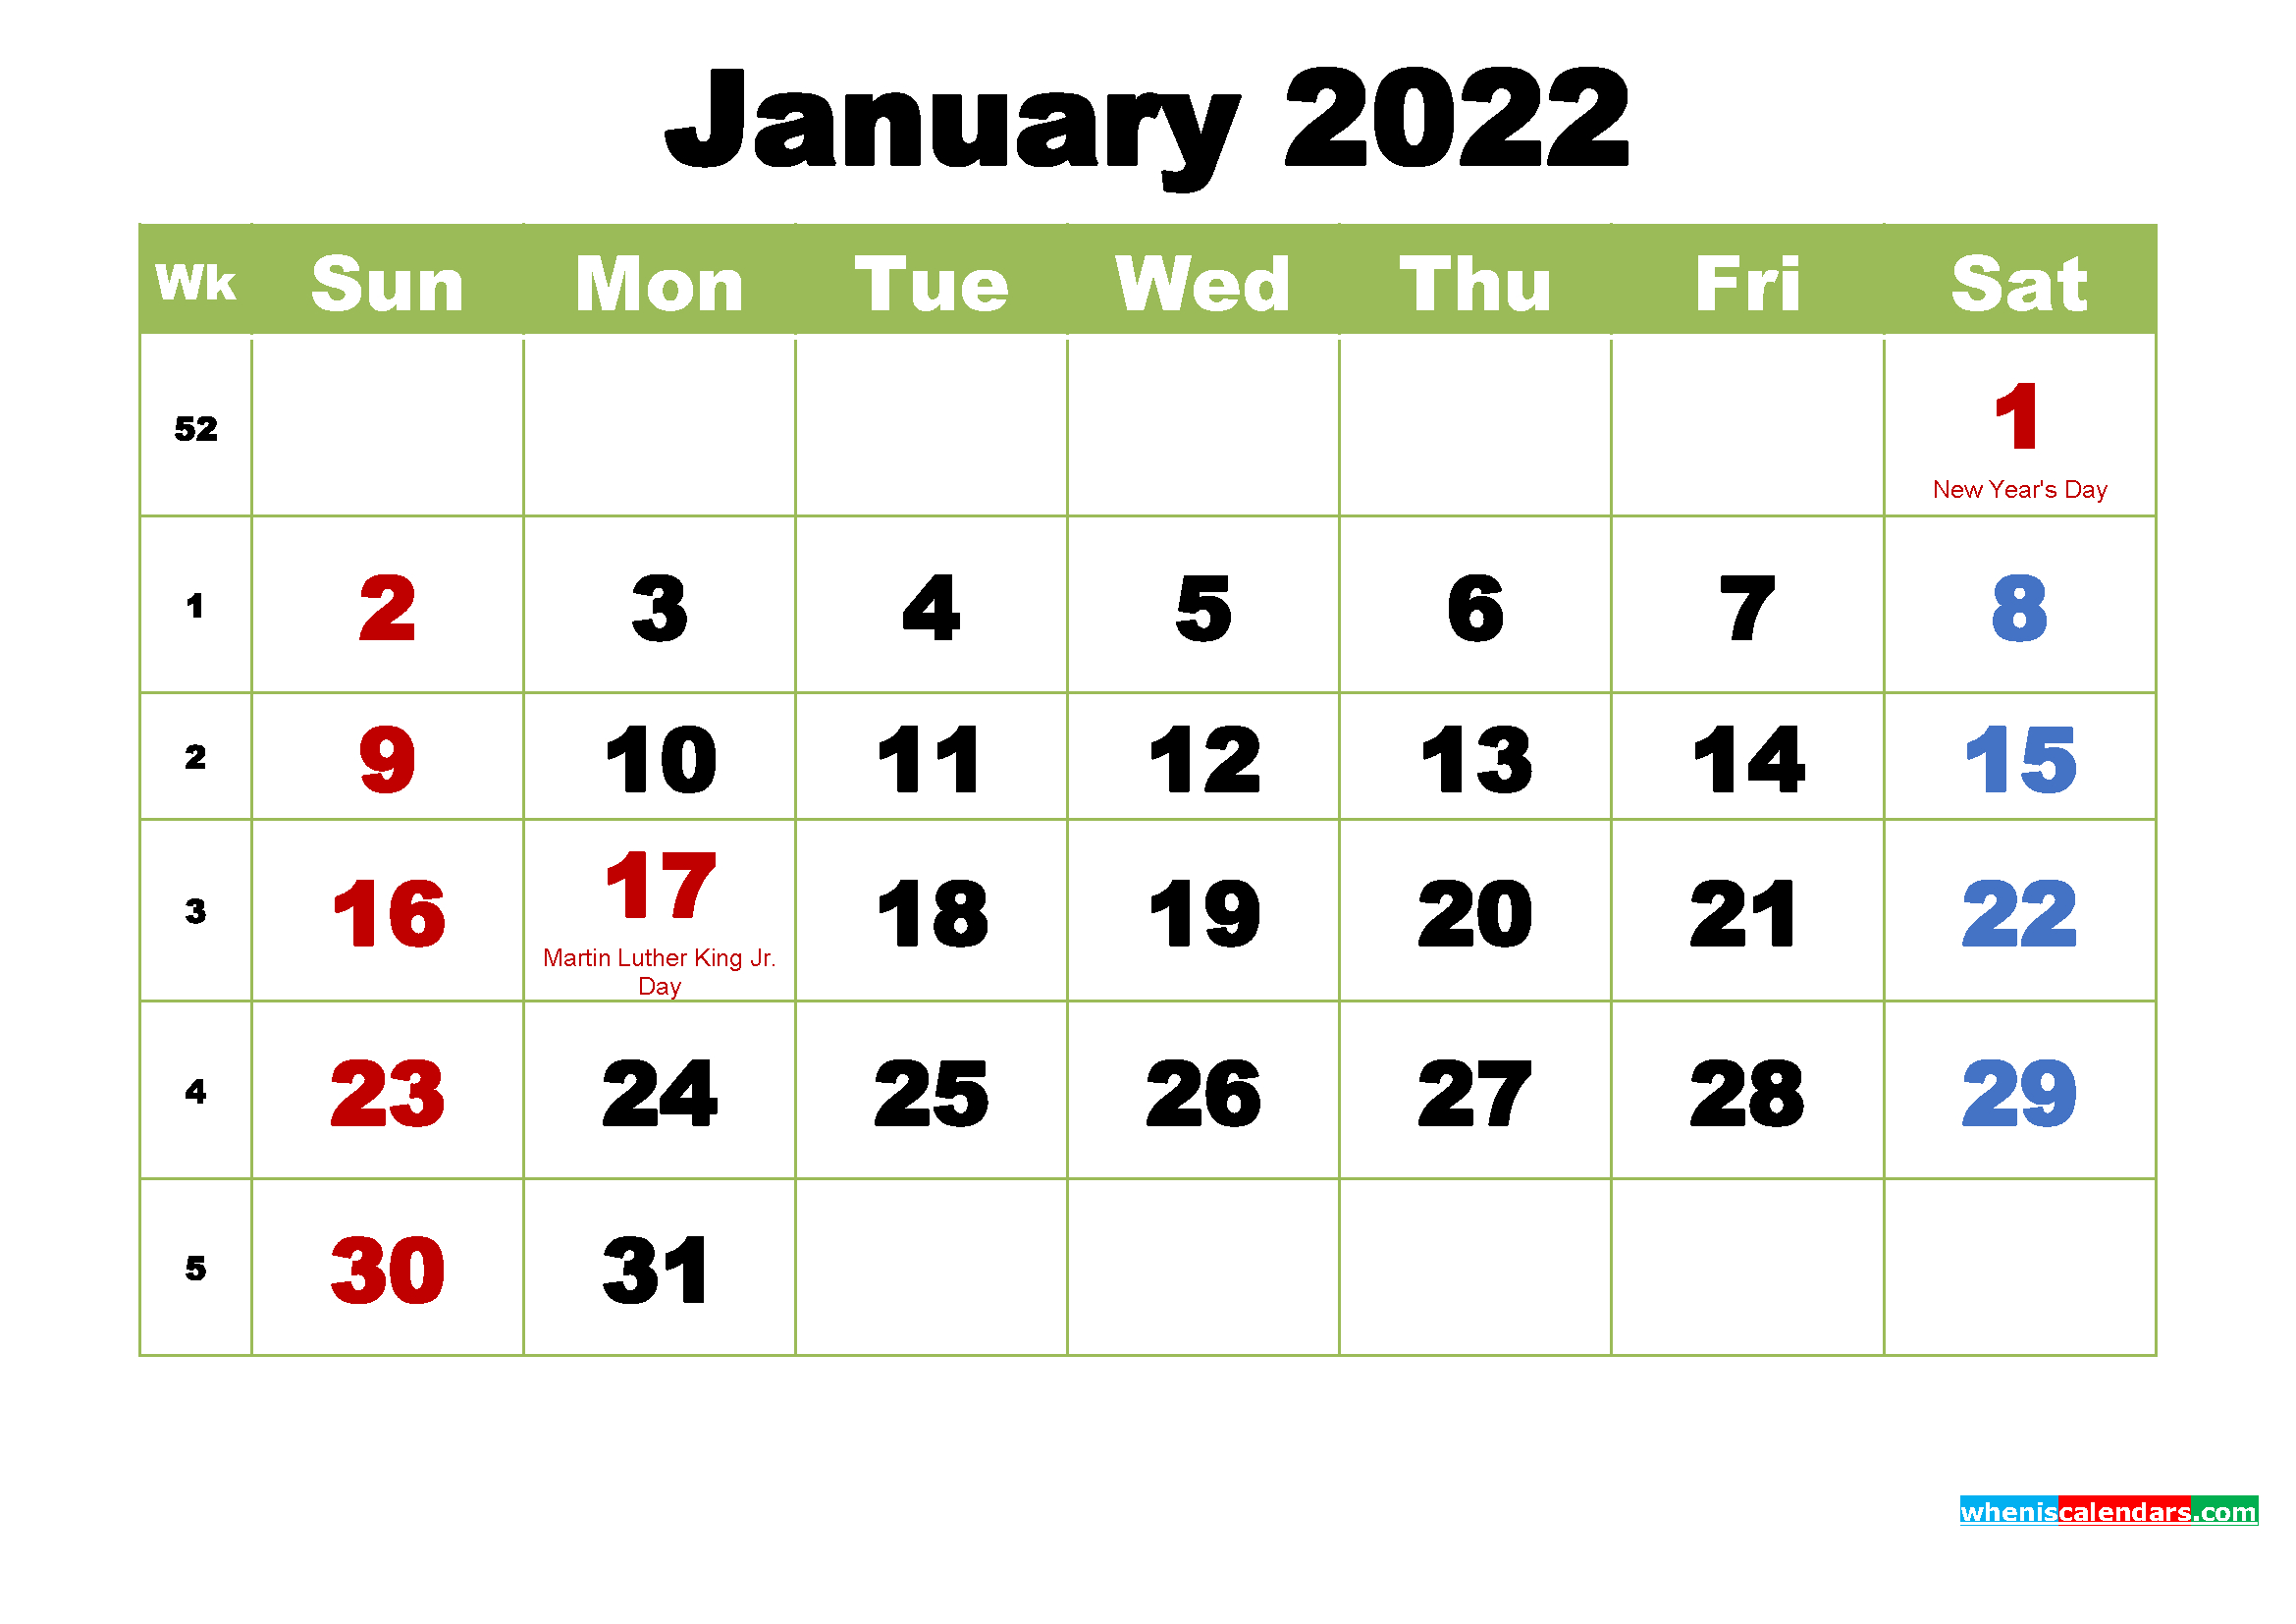 Take 2022 January Calendar Images